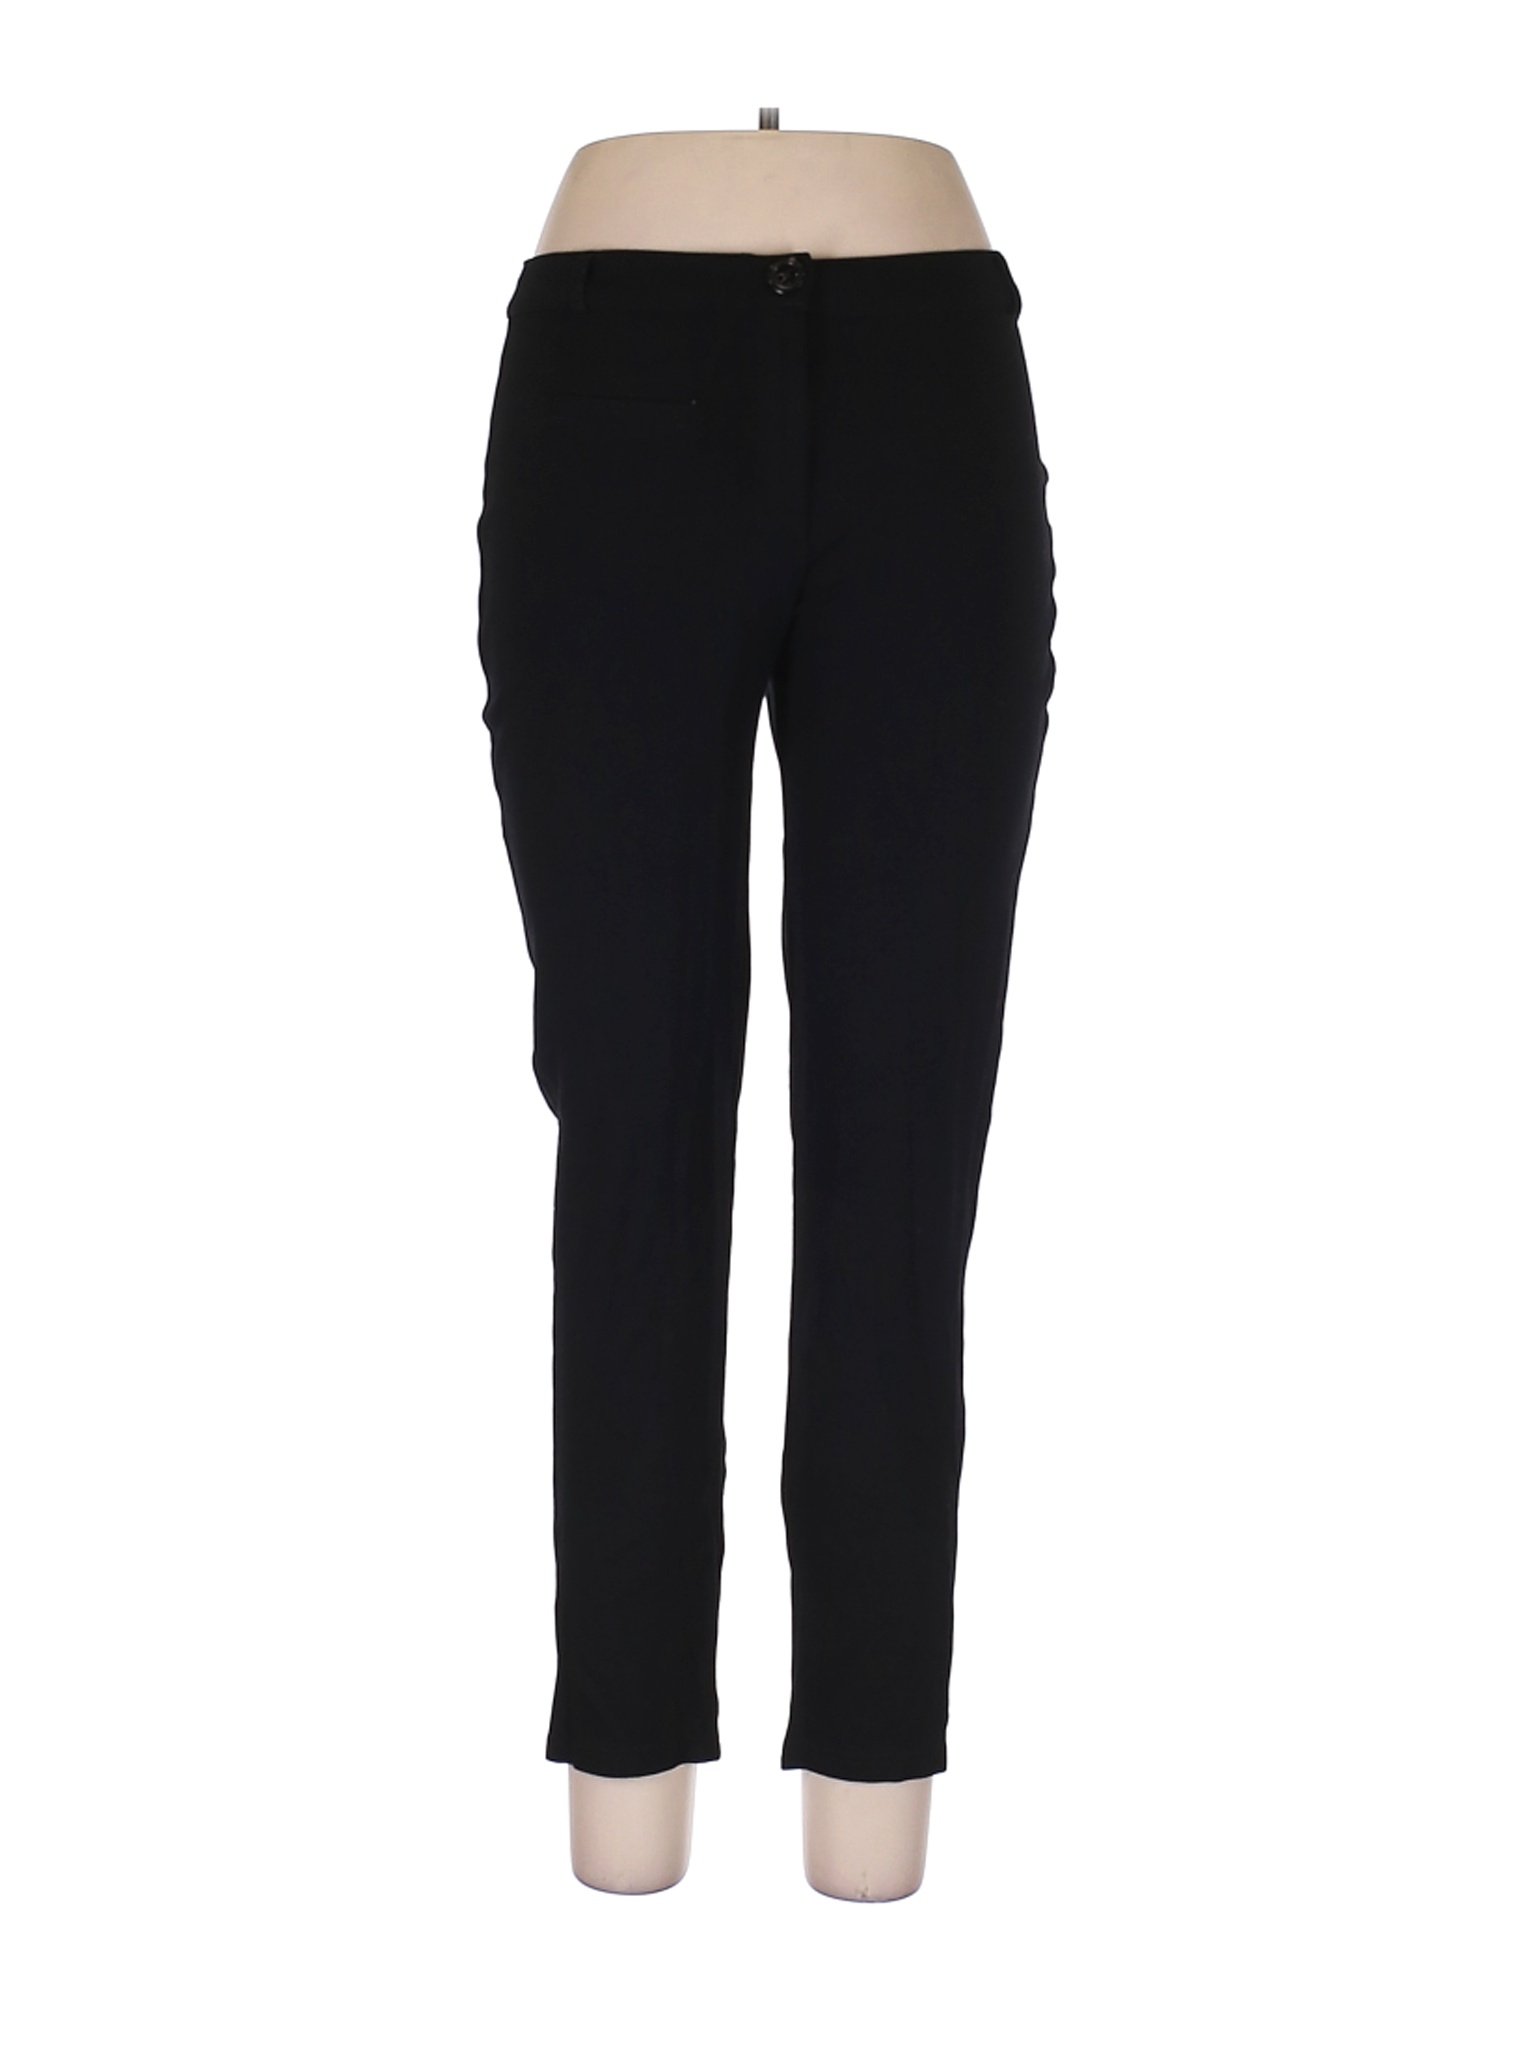 ANDI Women Black Casual Pants 32W | eBay